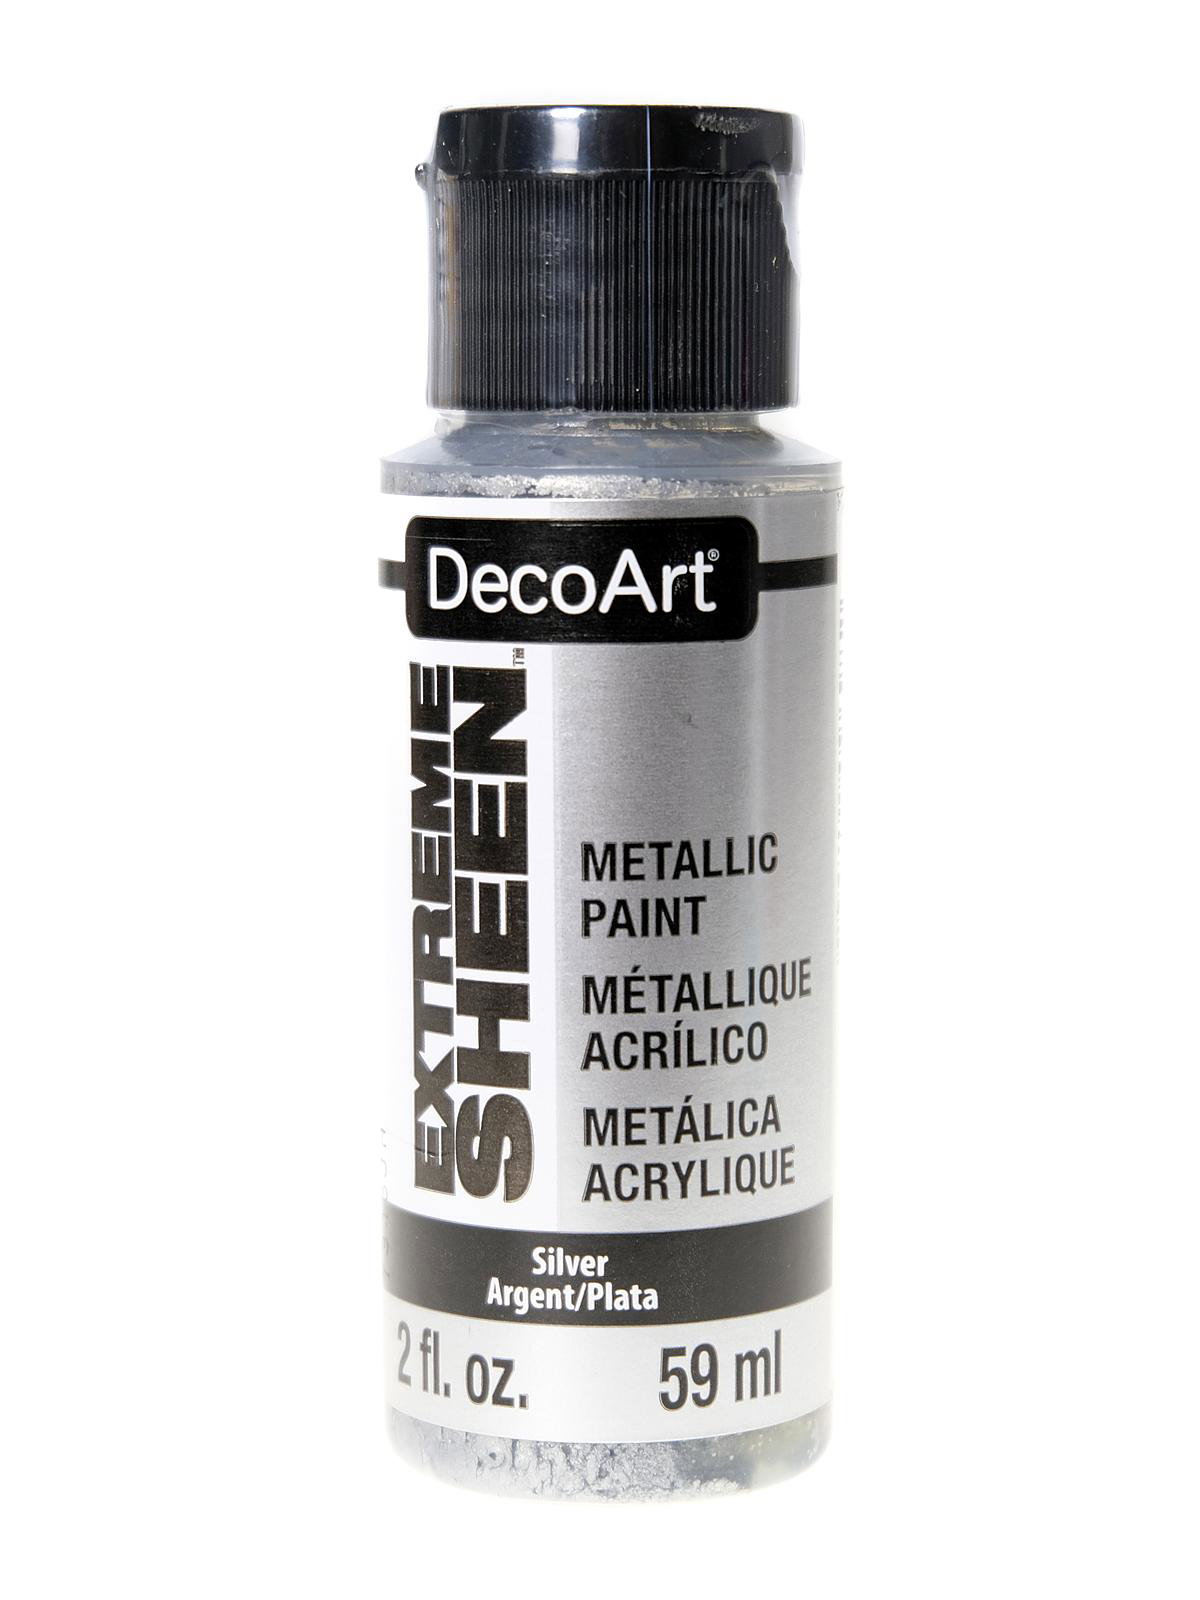 DECO ART DPM04-30-XCP3 Extreme Sheen Premium Metallic Craft Paint, 24K Gold,  2-oz. - pack of 3